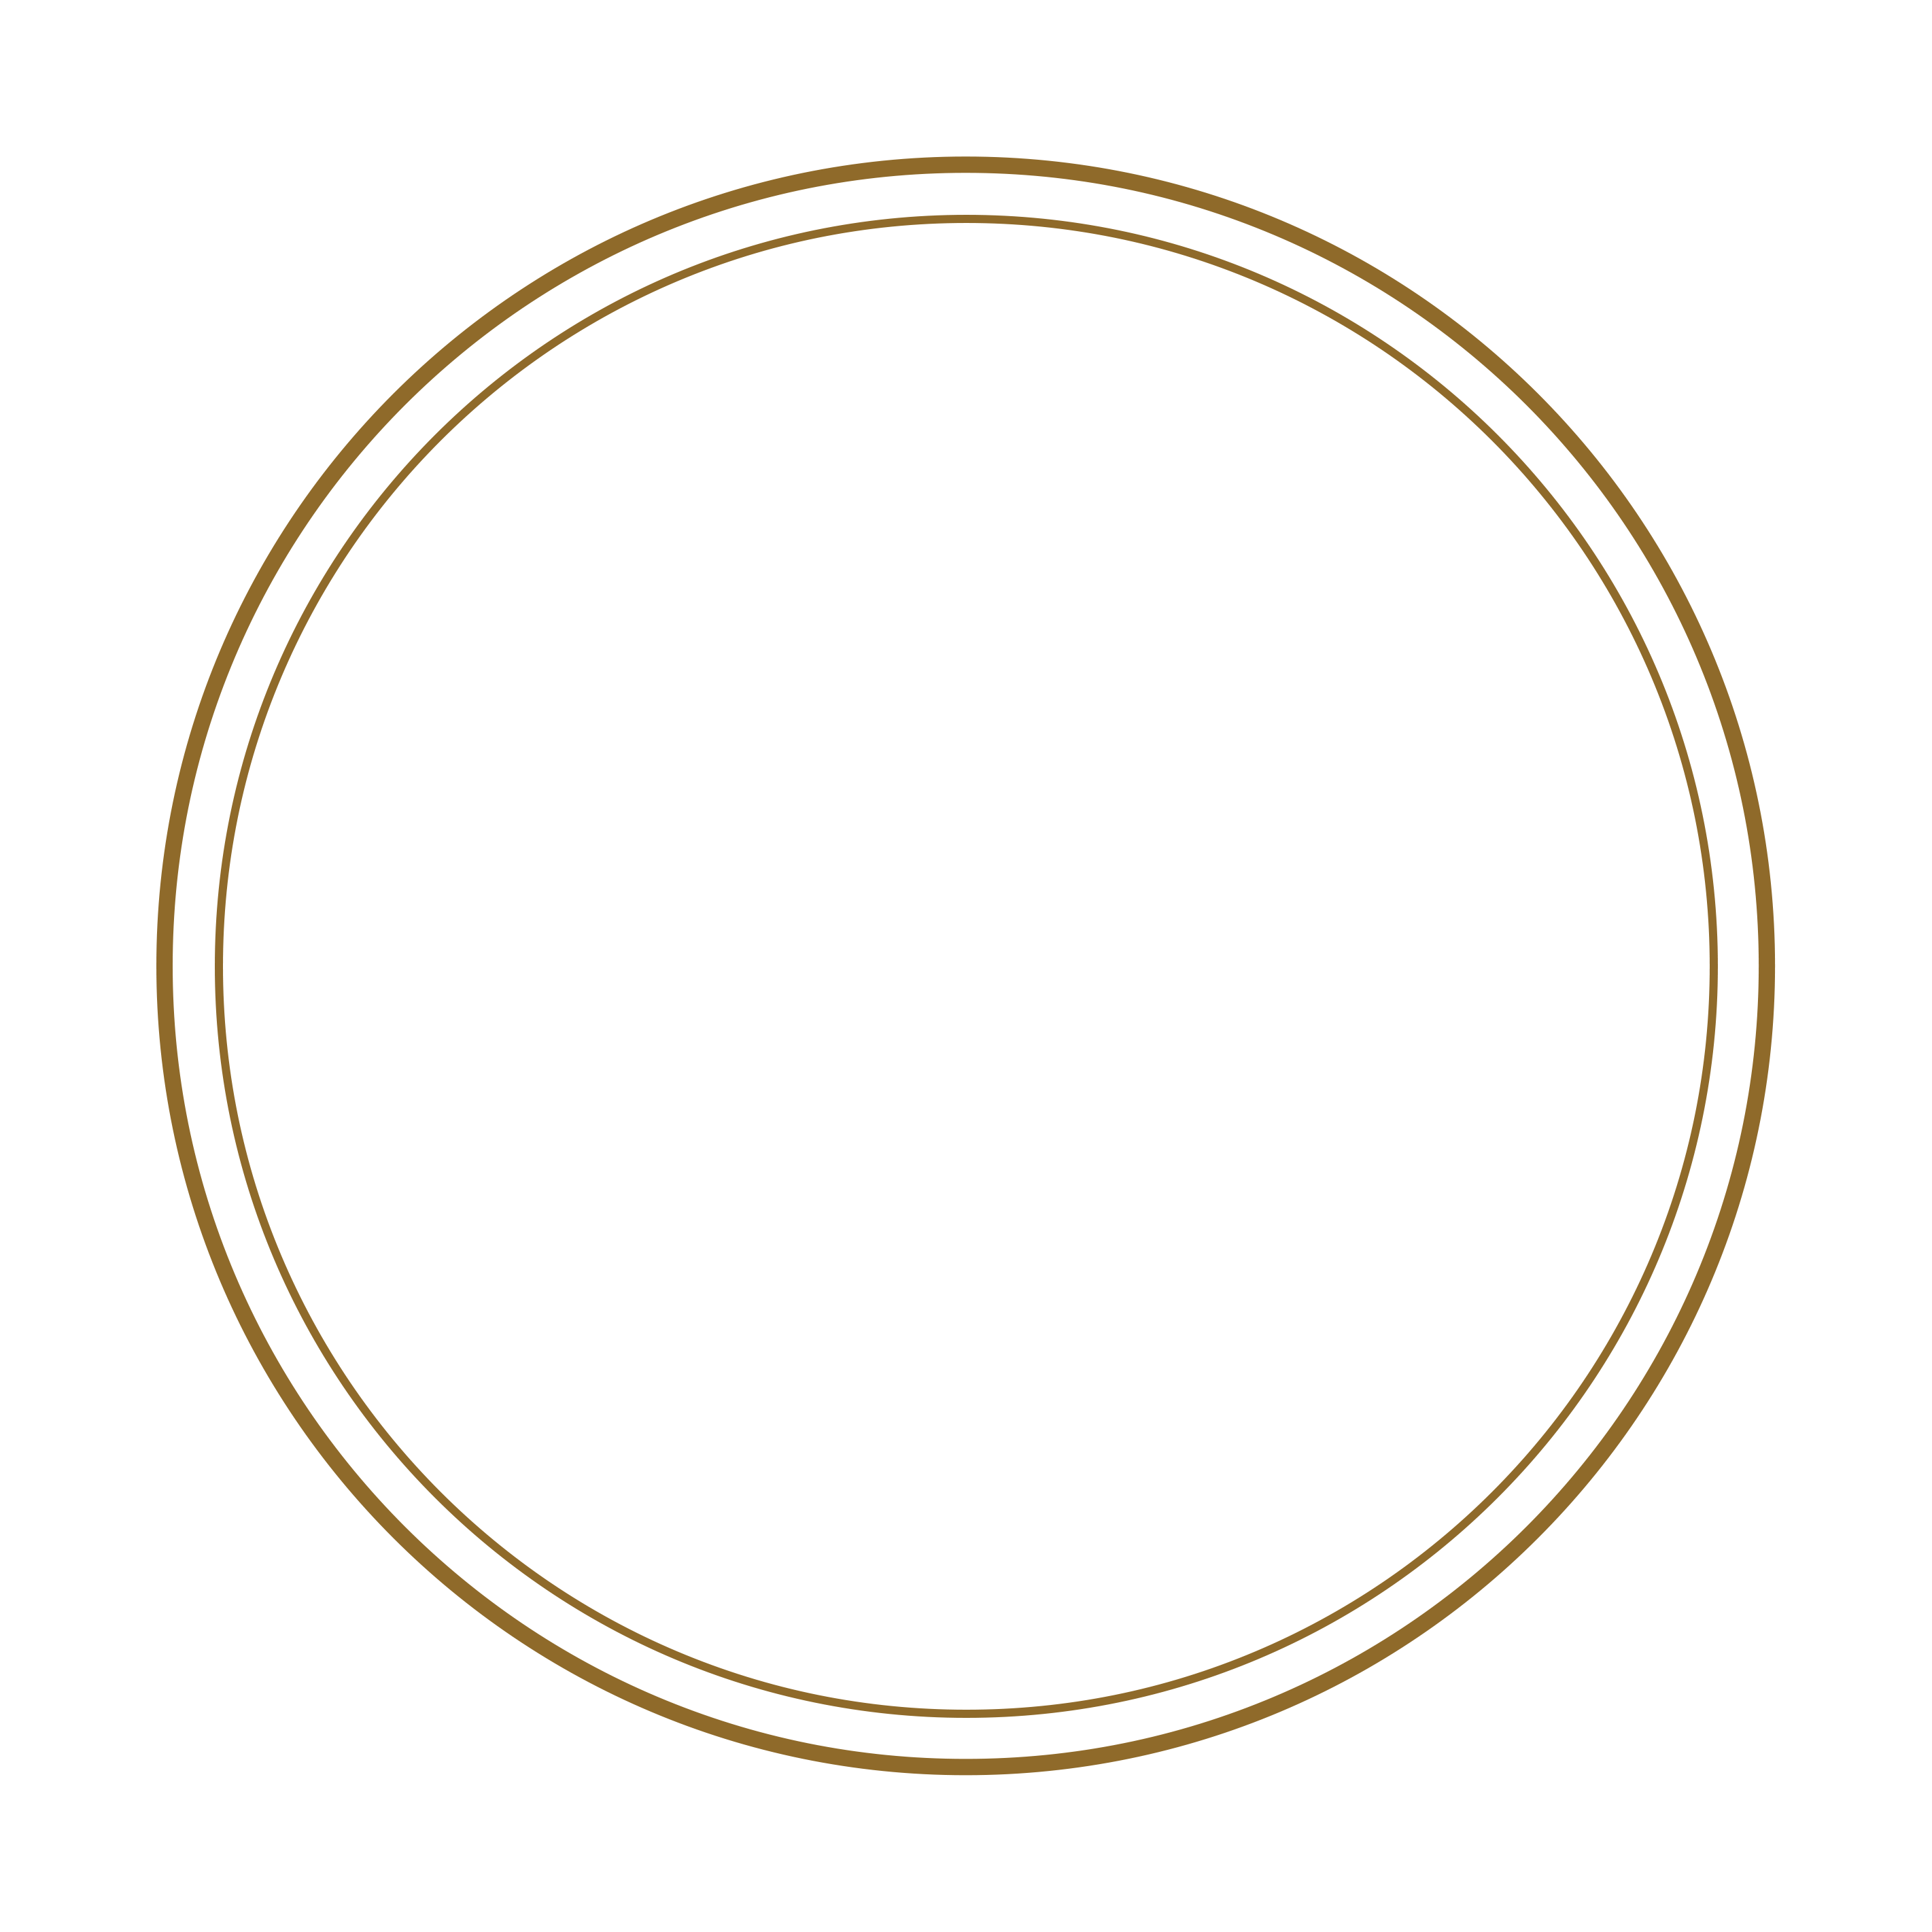 Paris Tasting 1976 seal